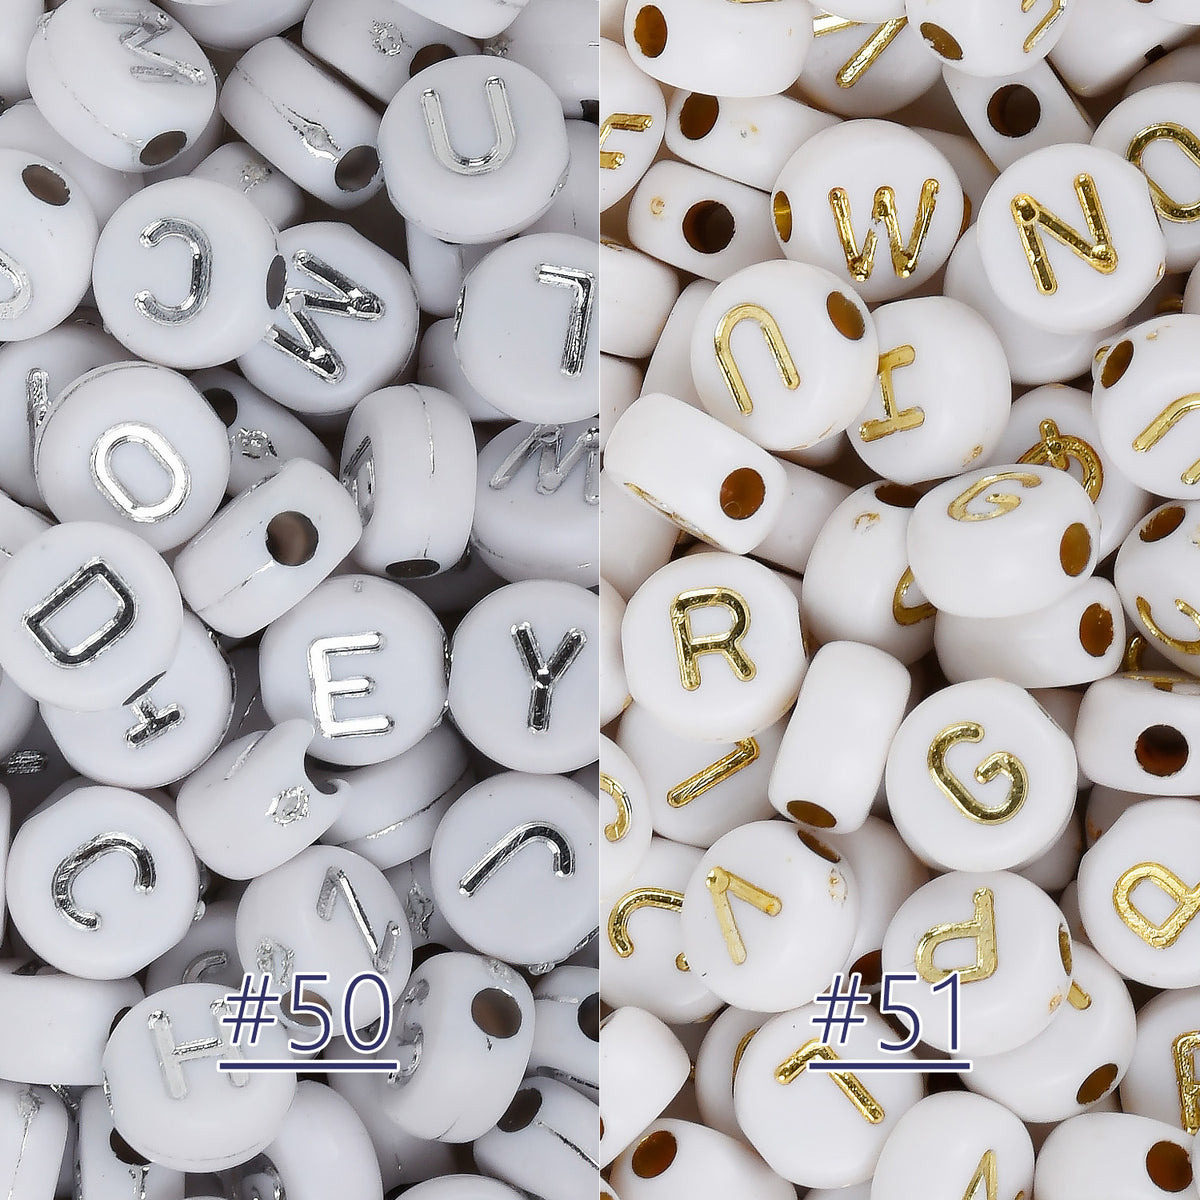 Alphabet Beads 7mm 250/Pkg-White Round W/Black Letters - 082676064807